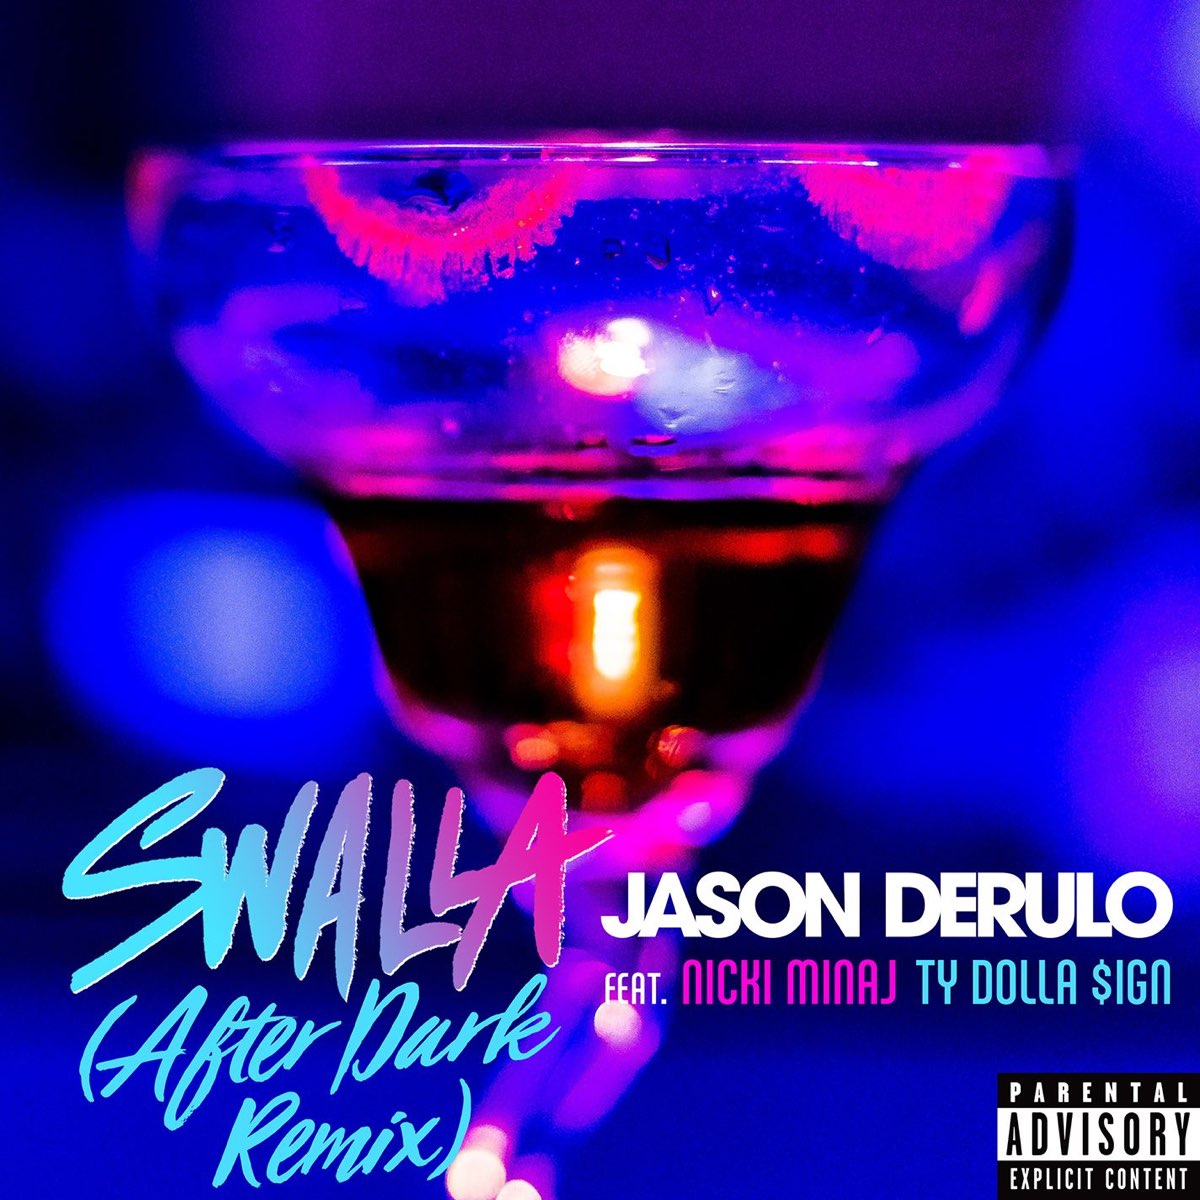 Diktere Forberedende navn Kejserlig Swalla (feat. Nicki Minaj & Ty Dolla $ign) [After Dark Remix] - Single by  Jason Derulo on Apple Music